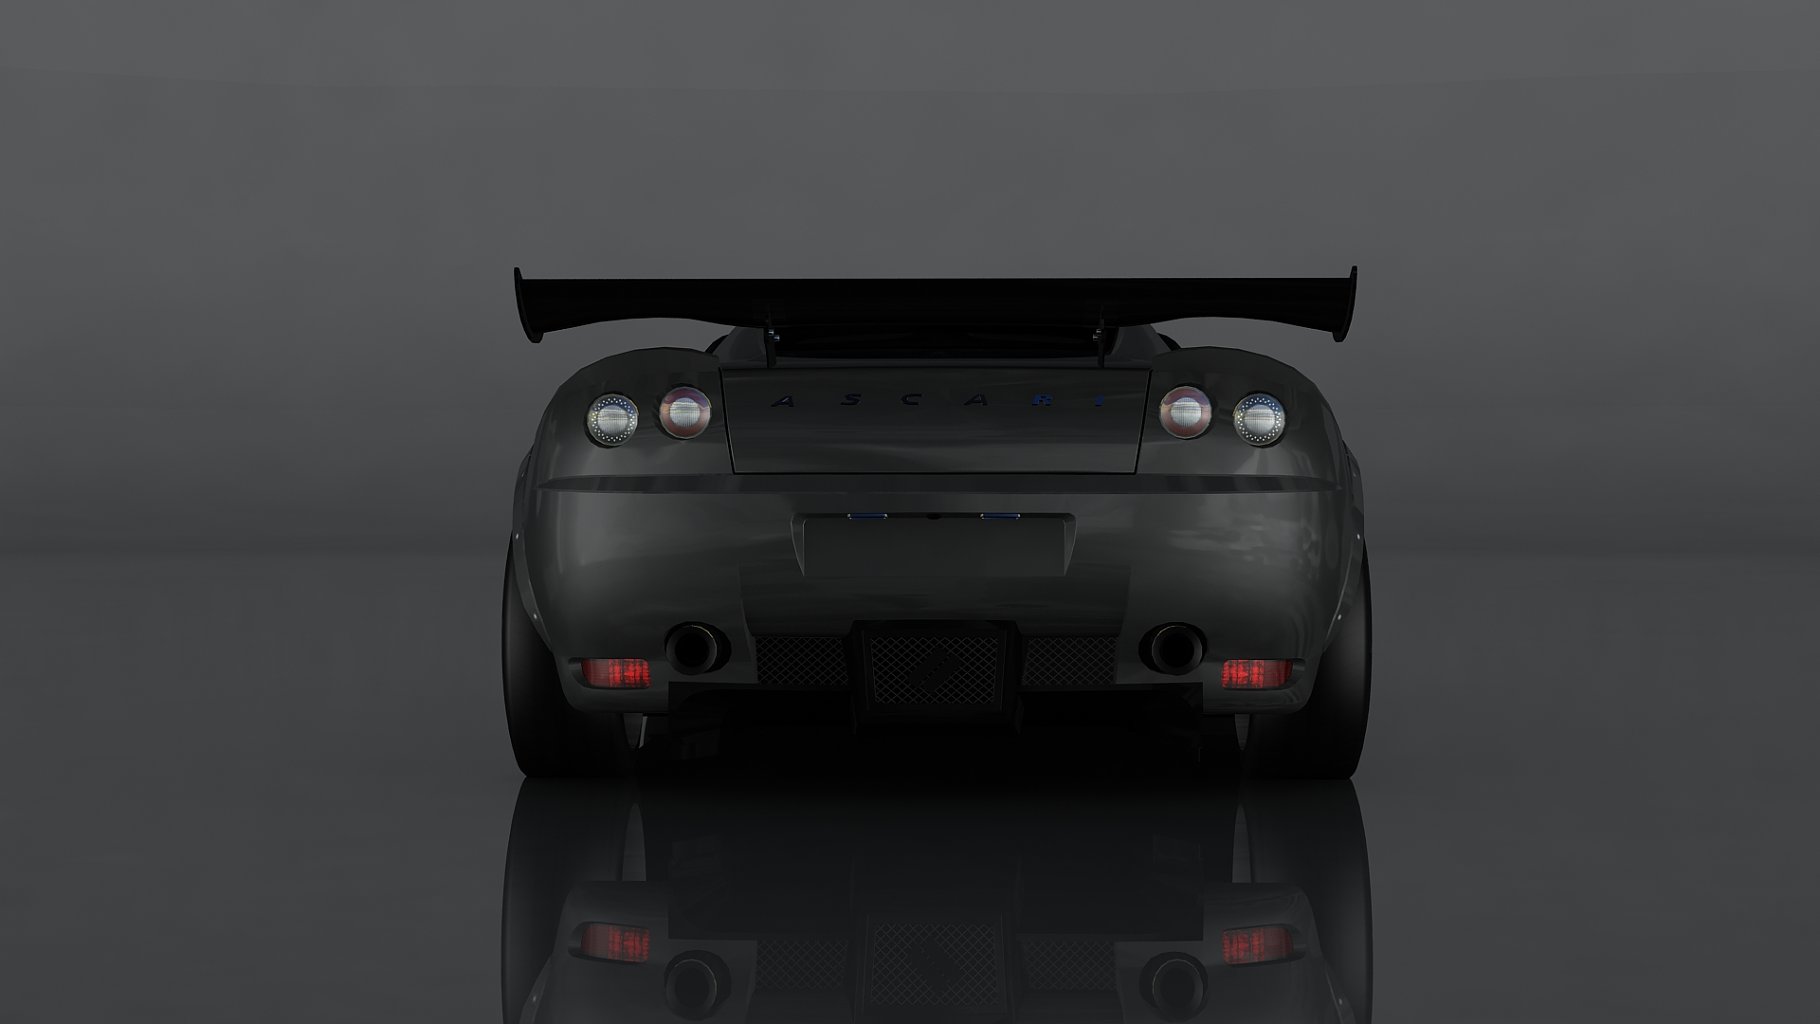 Back mockup of ascari kz1r low poly 3d model on a dark gray background.